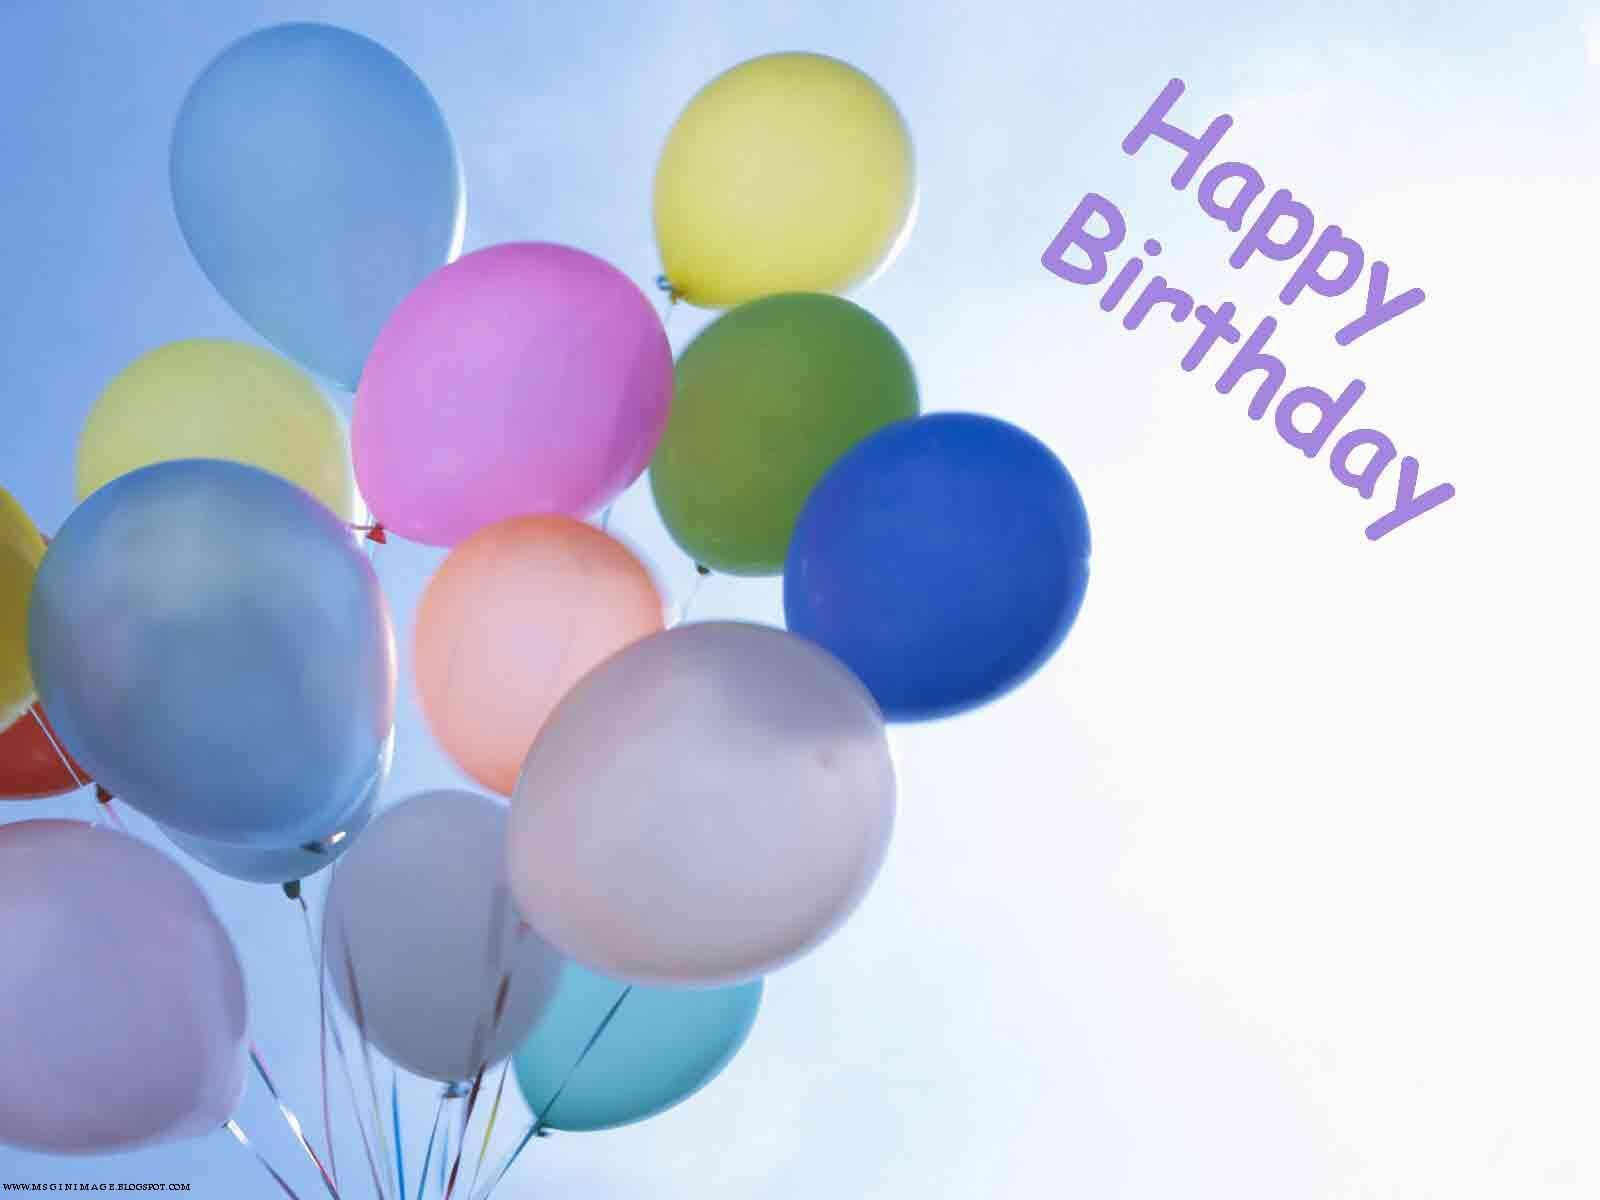 Happy Birthday Cards | Microsoft Word Templates, Birthday Throughout Birthday Card Template Microsoft Word